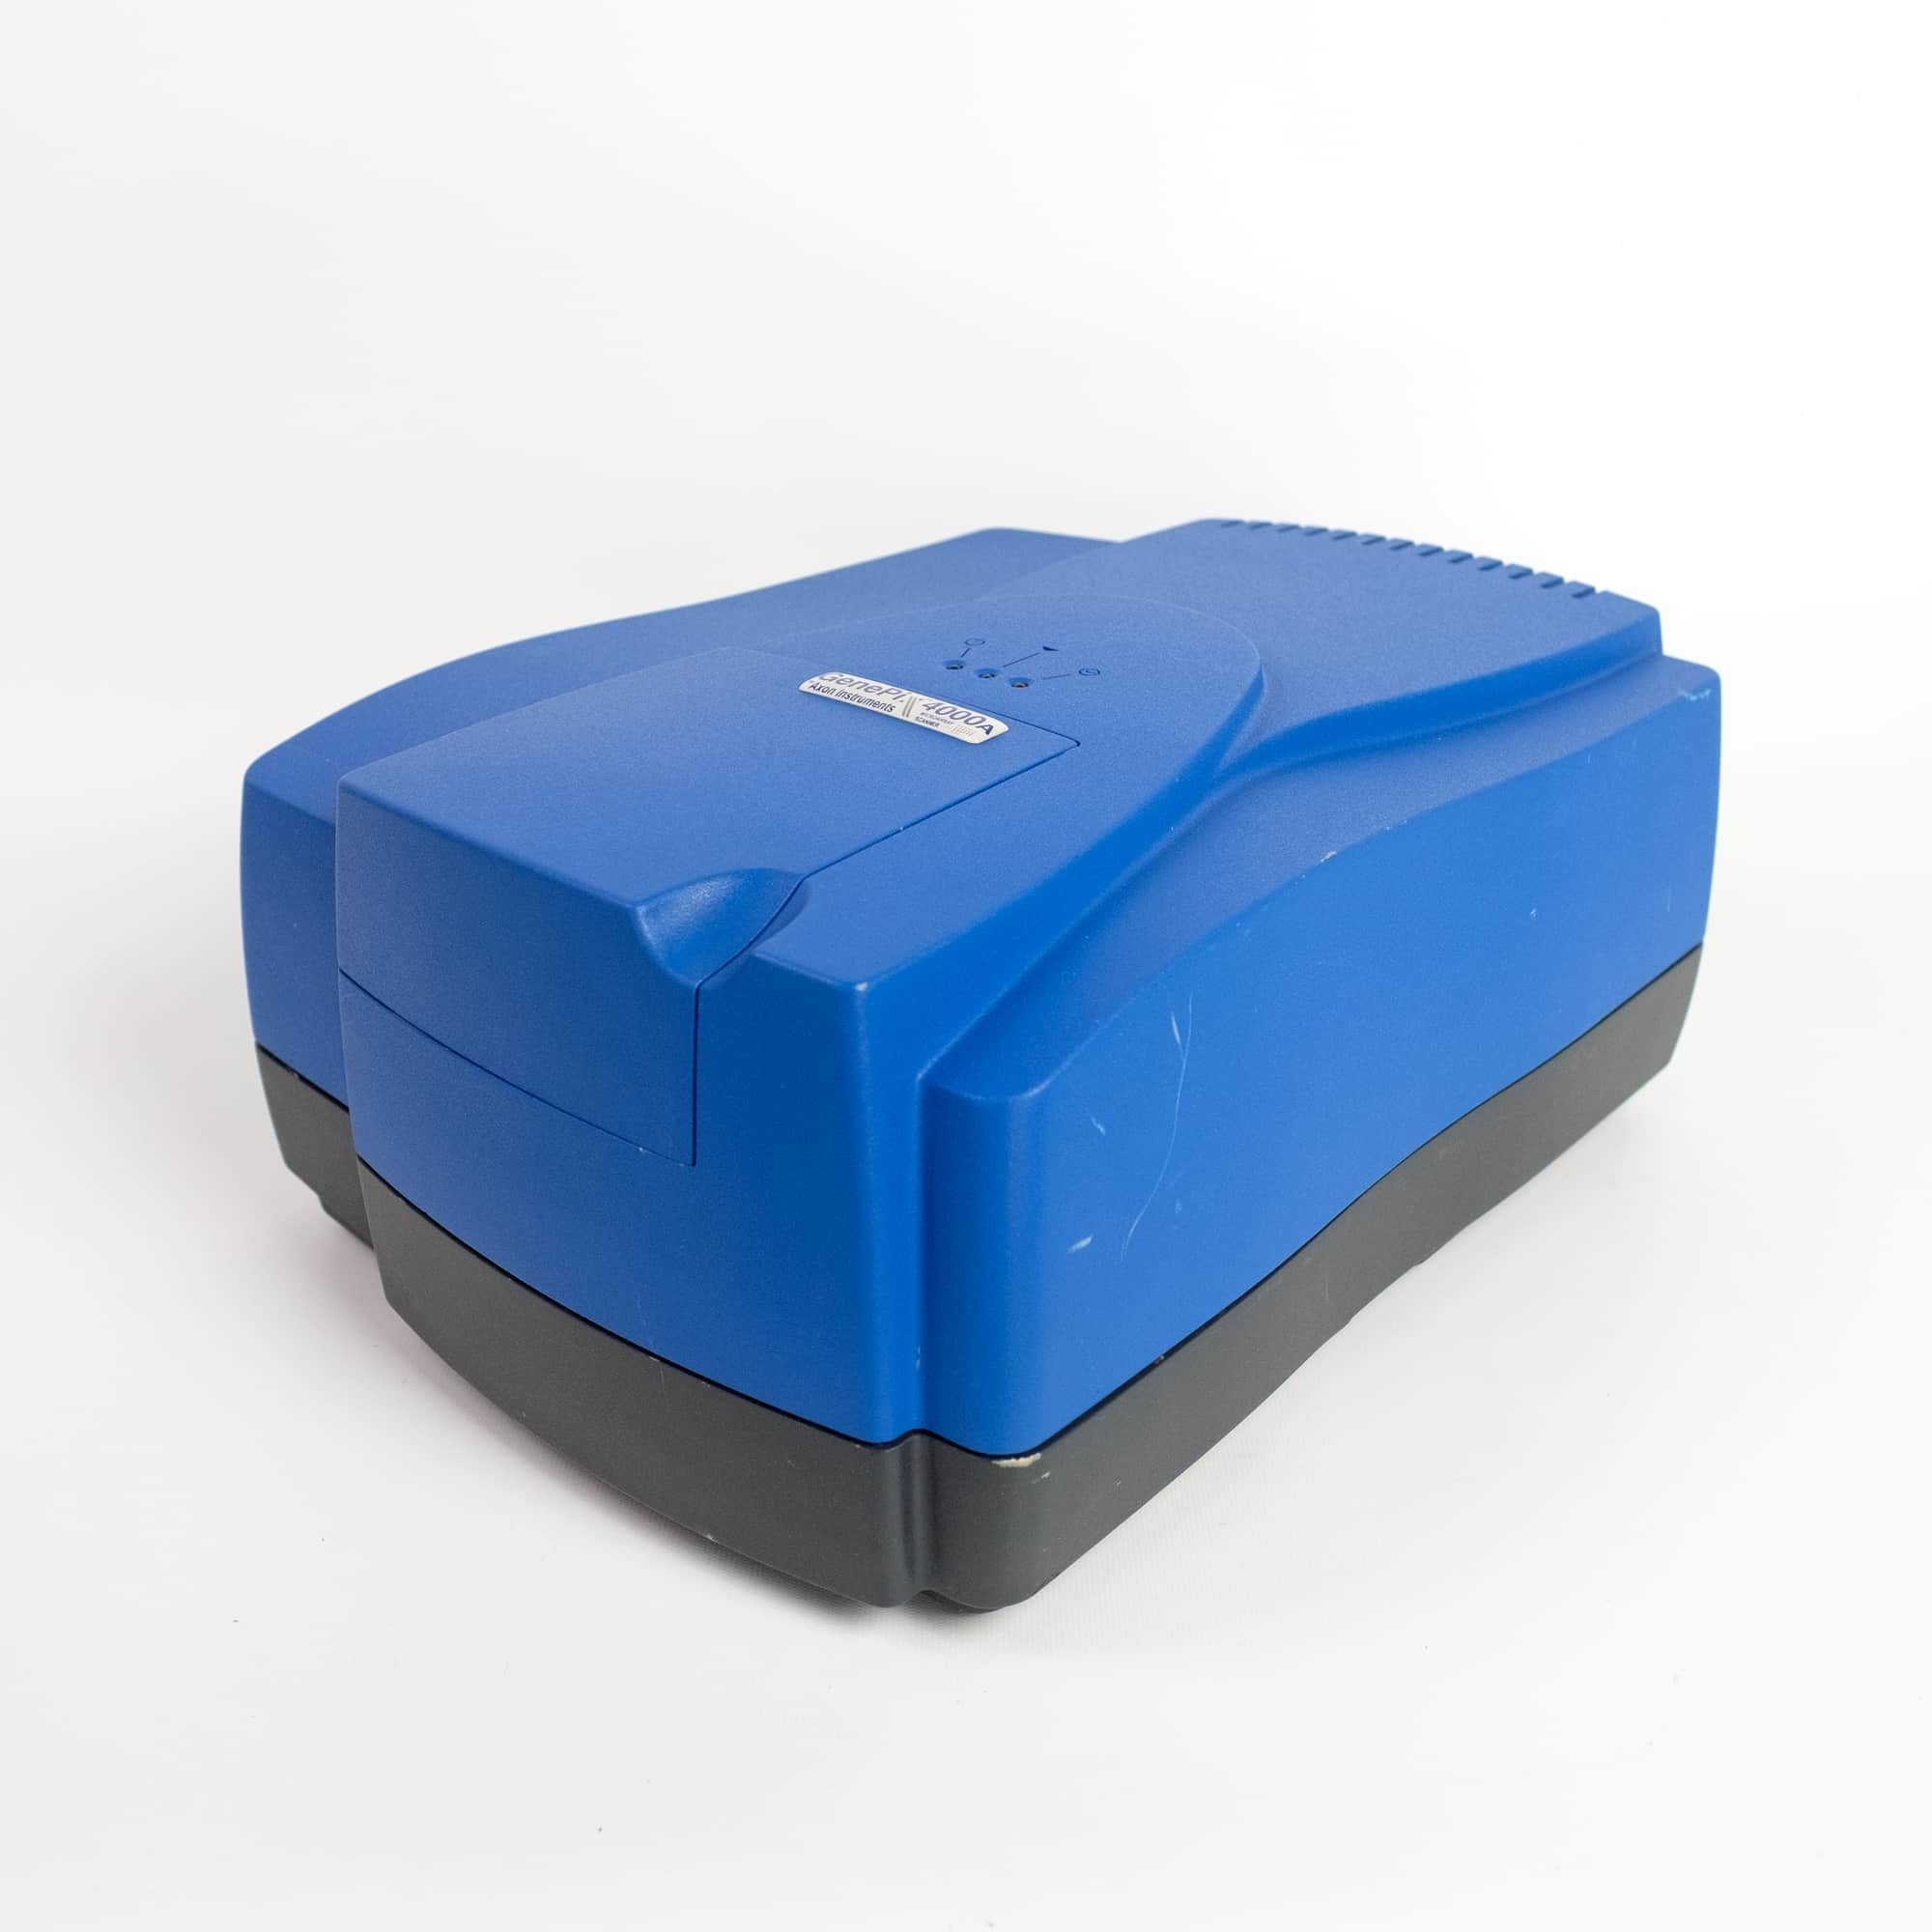 Axon Instruments GenePix 4000A Microarray Scanner